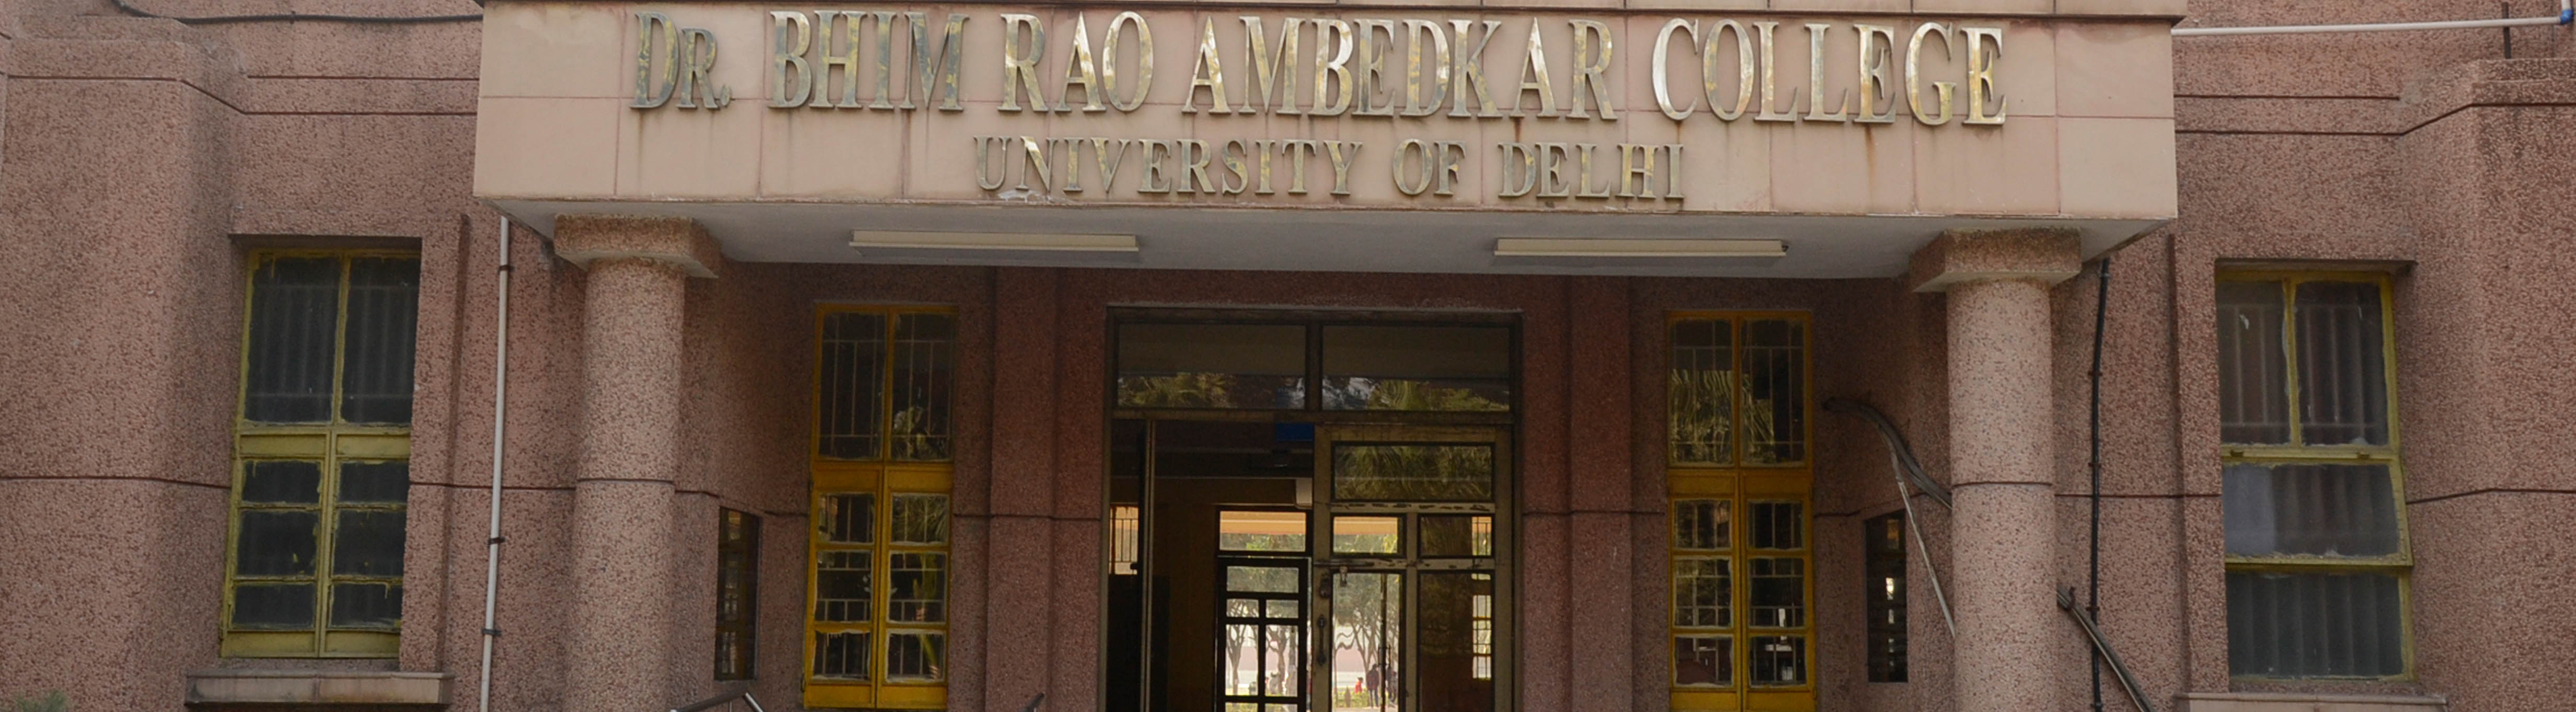 Bhim Rao Ambedkar College, Delhi Image